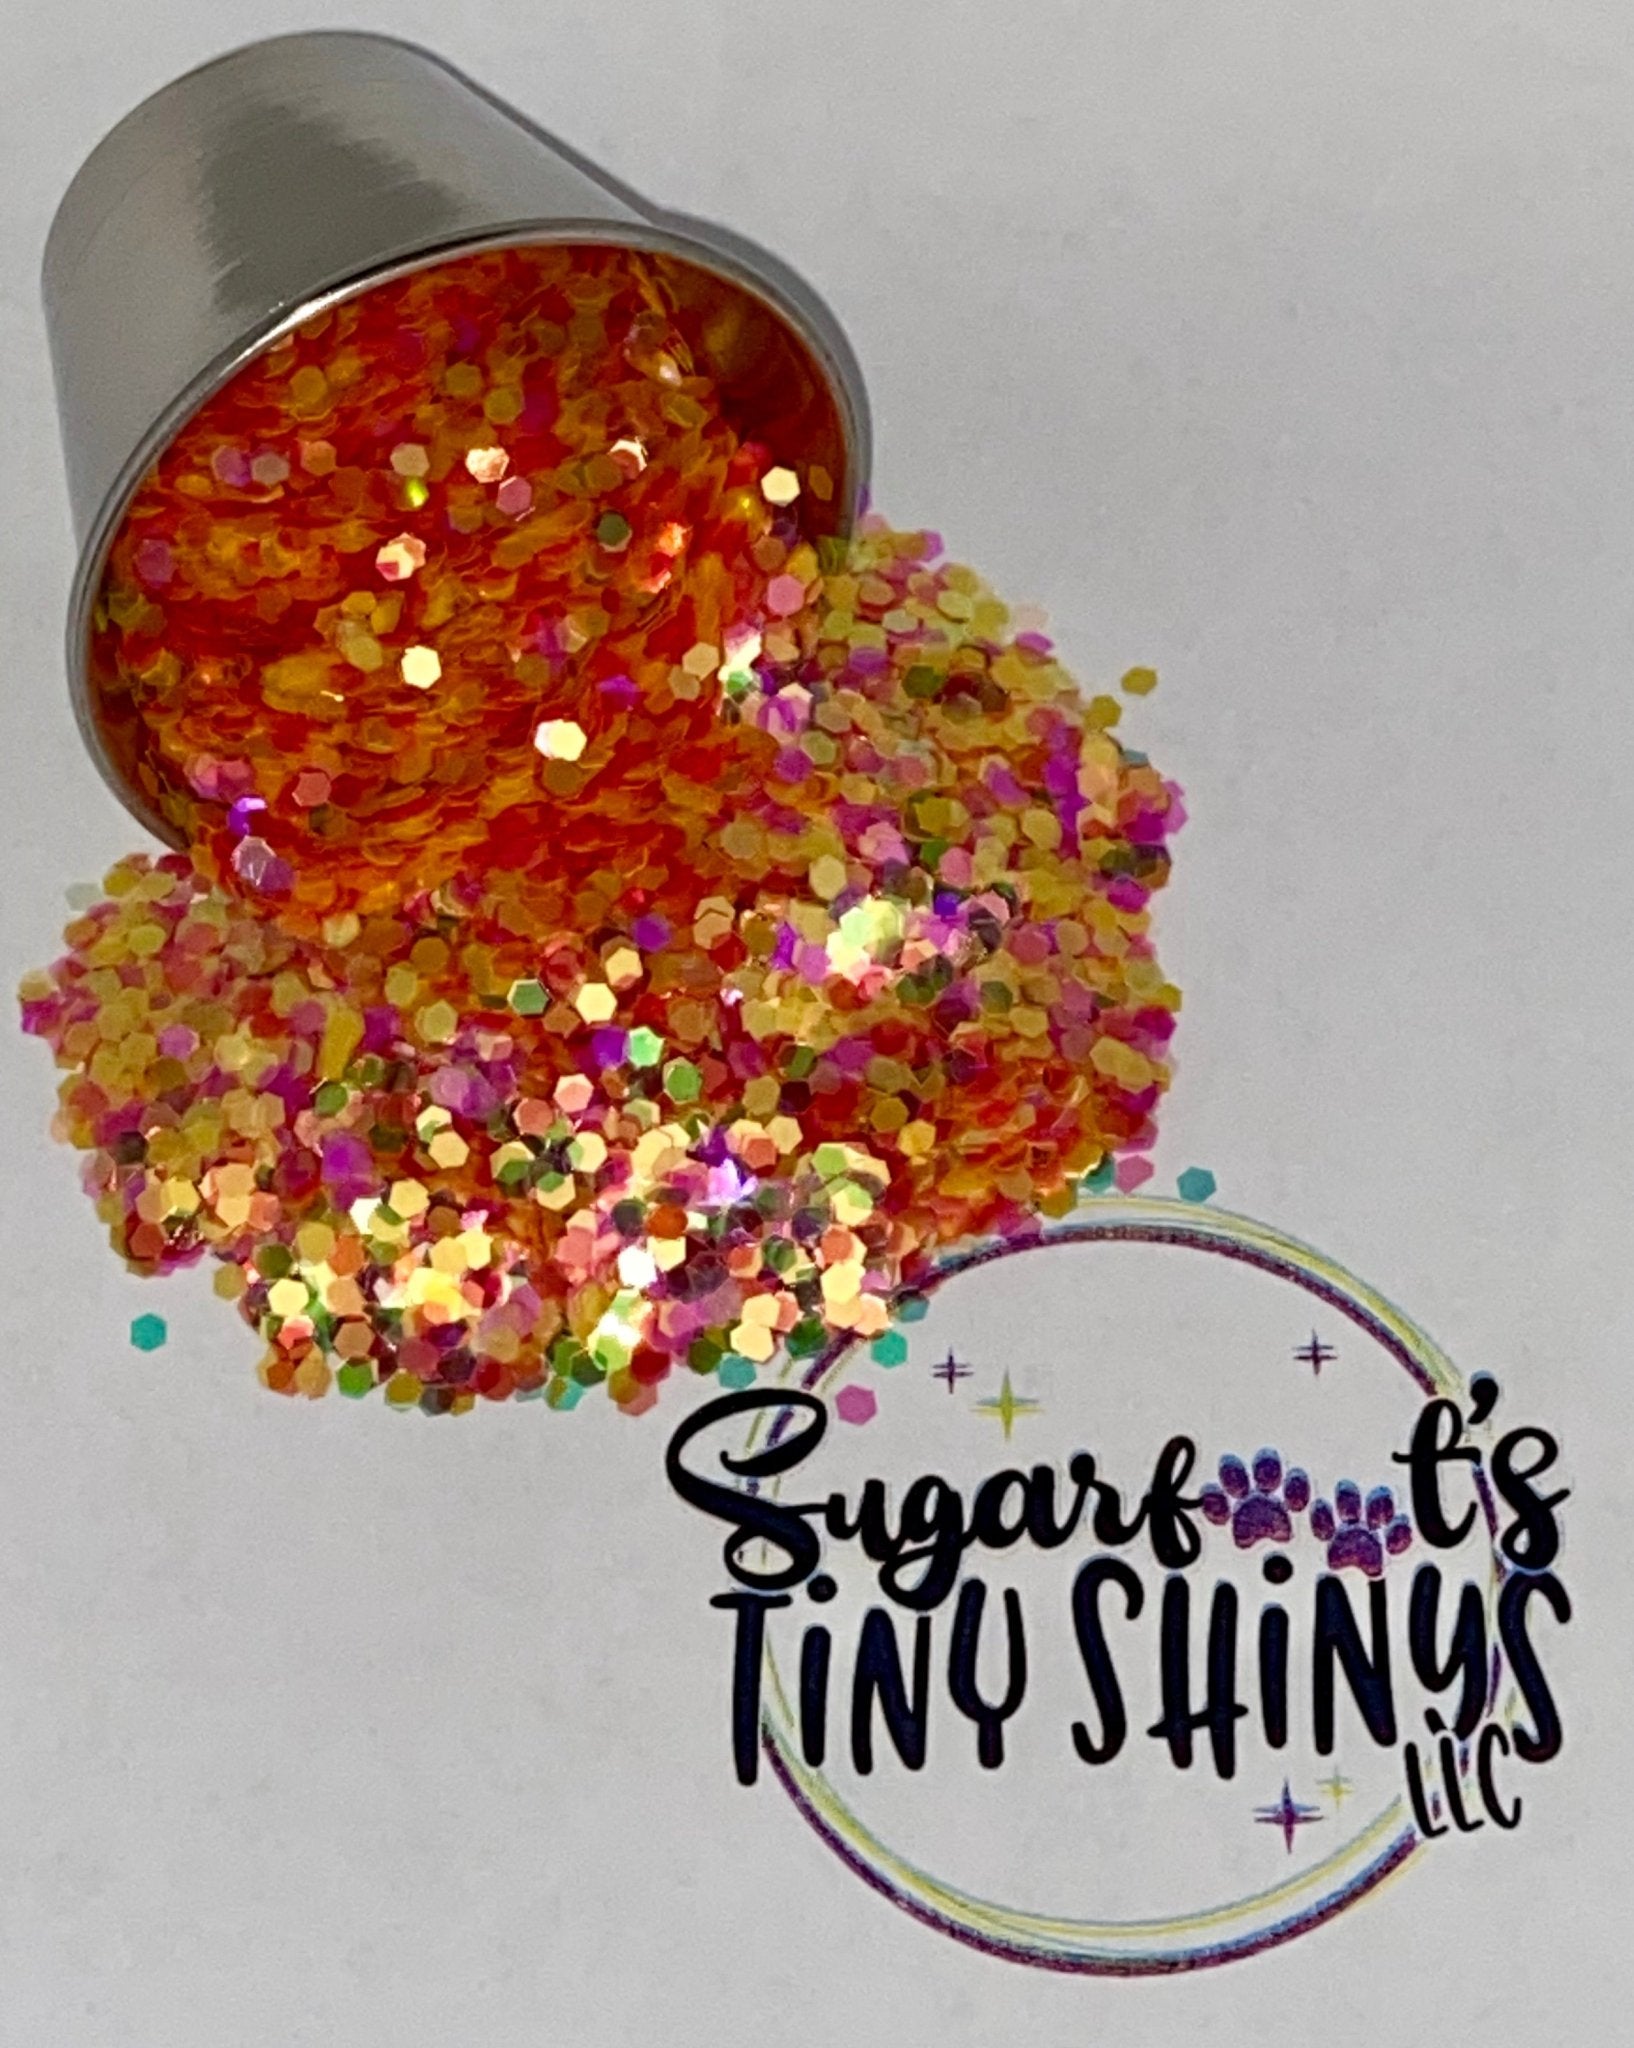 Embers - Sugarfoot's Tiny Shinys, LLC